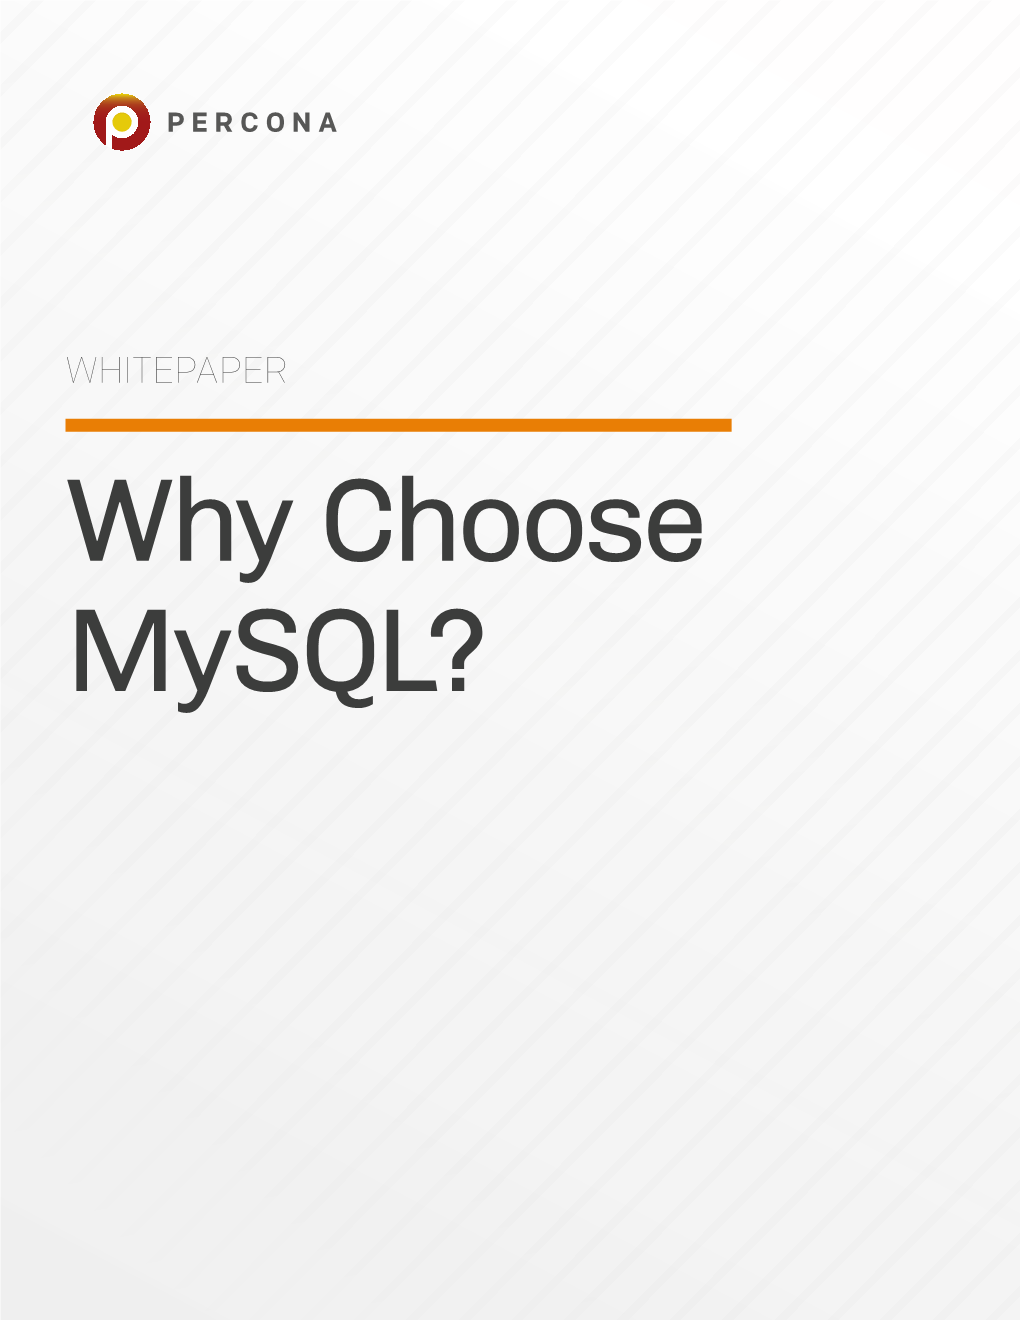 WHITEPAPER Why Choose Mysql? Why Choose Mysql?